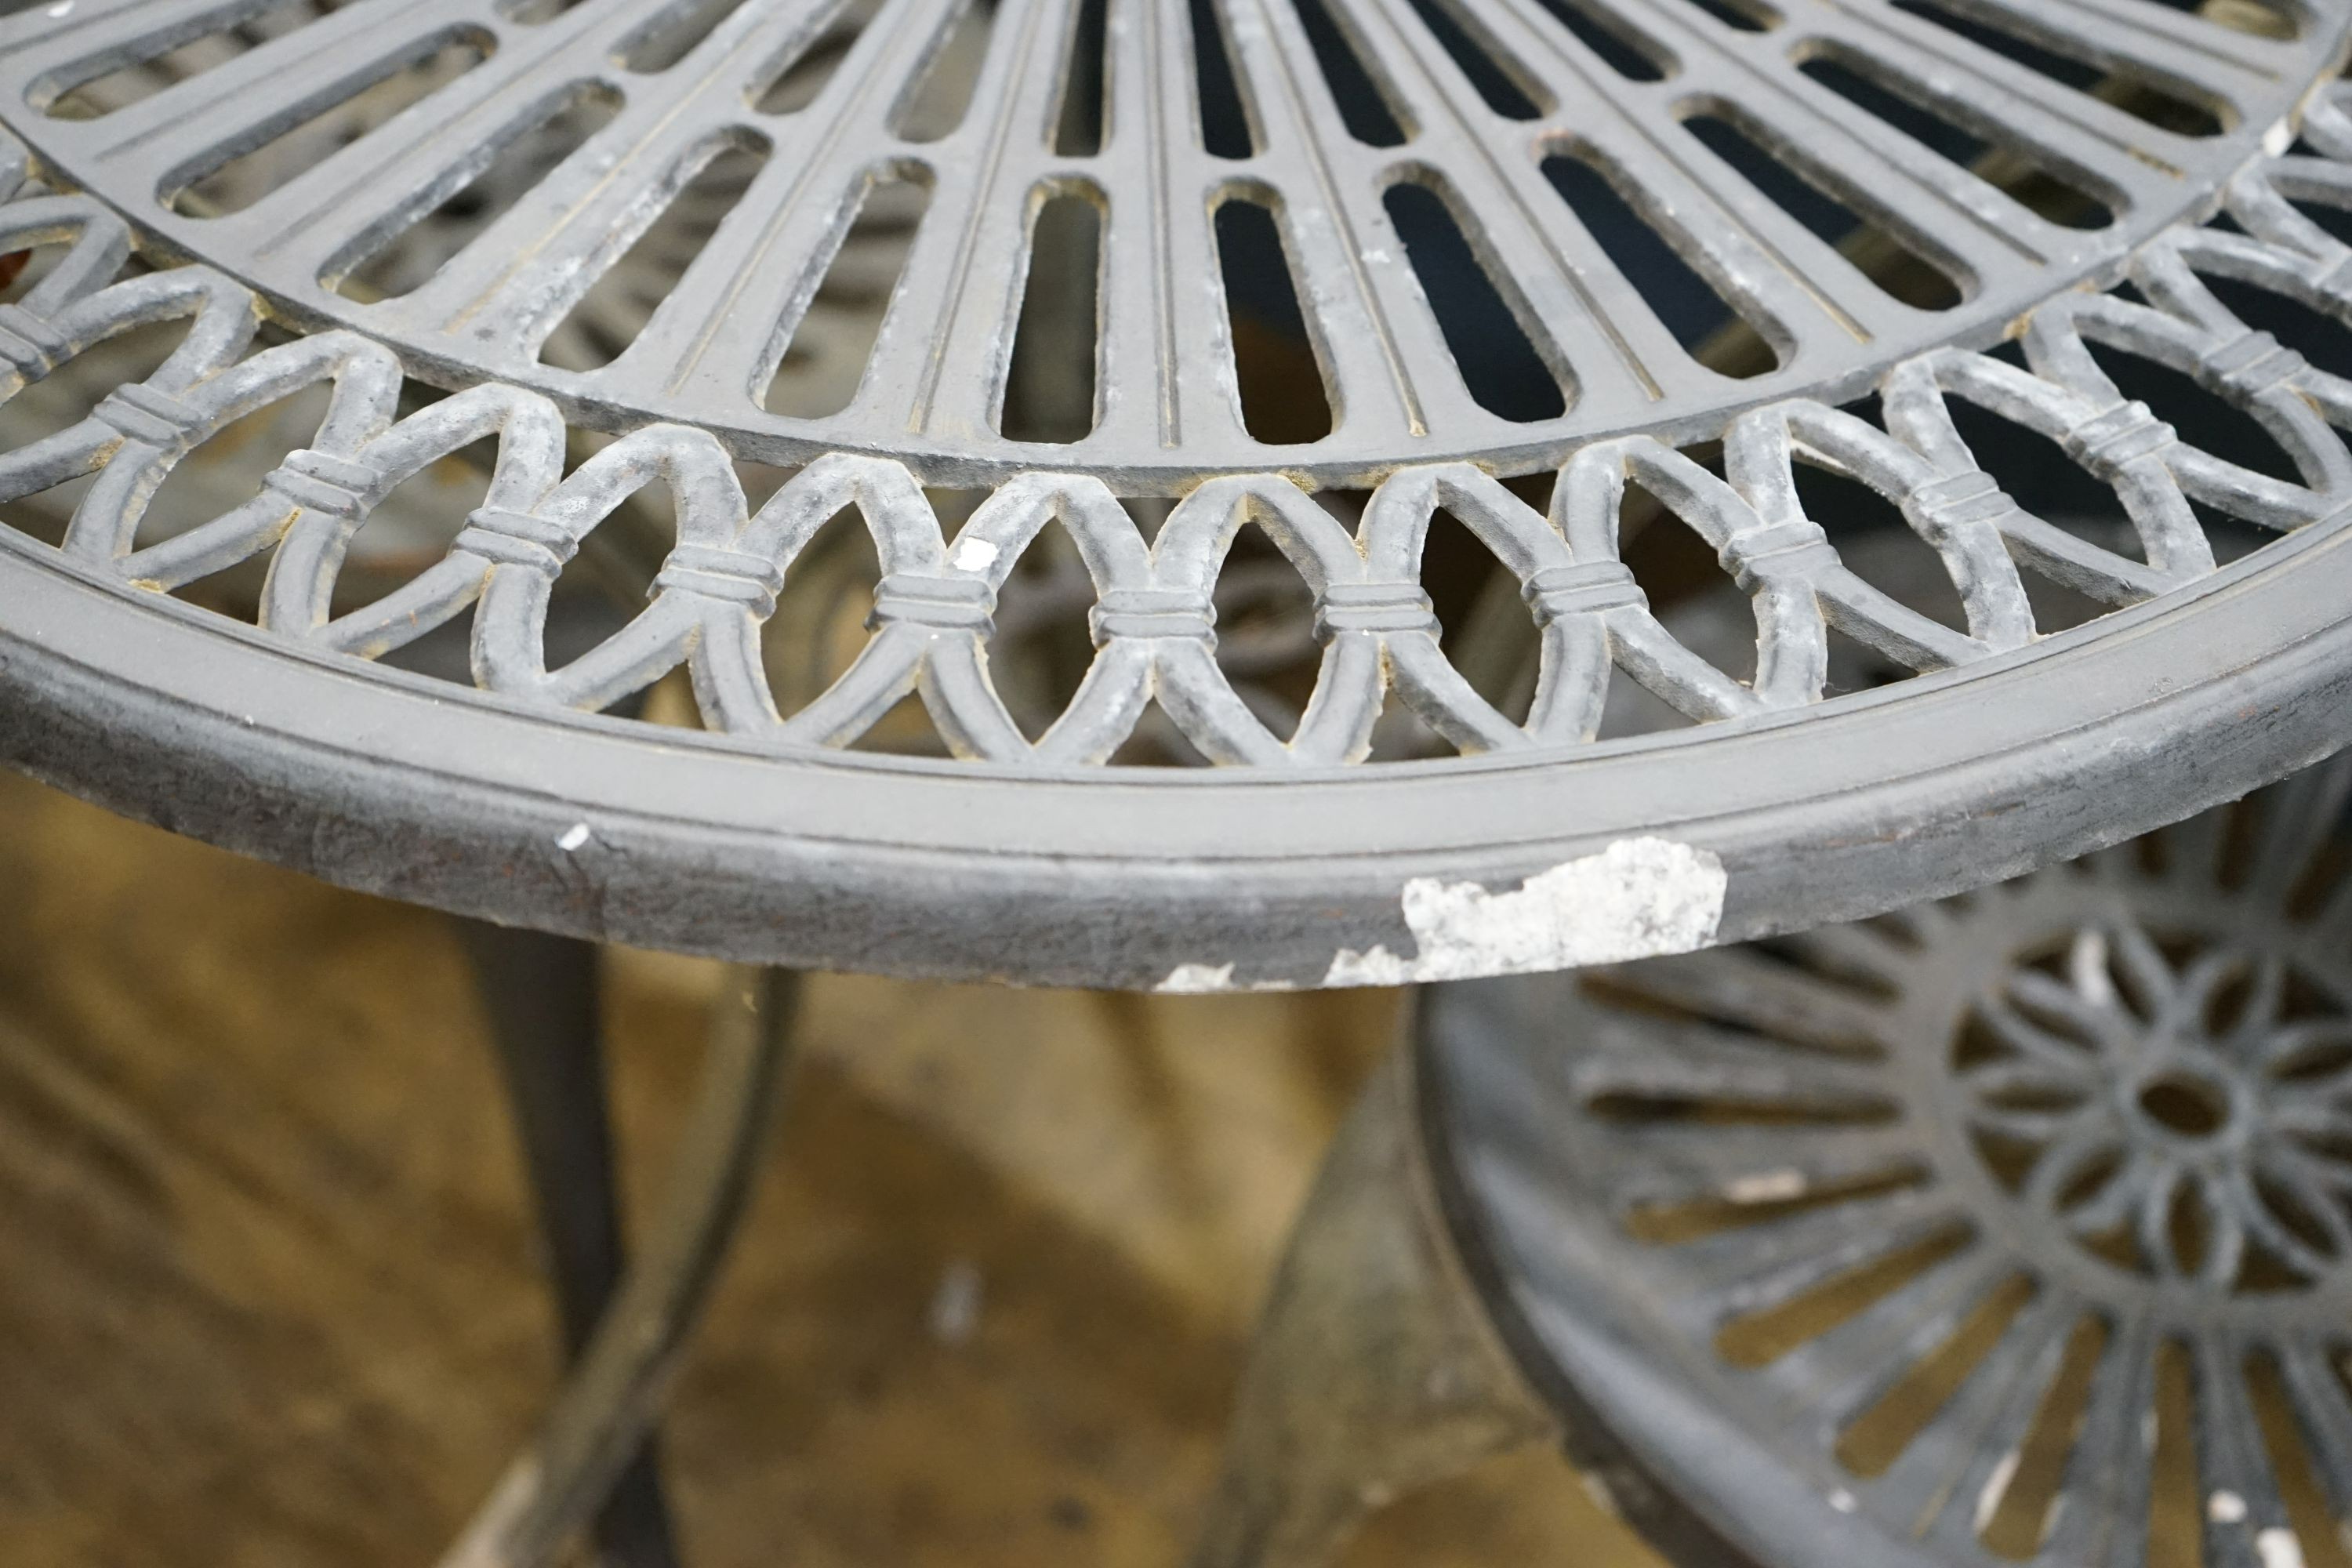 A circular aluminium garden table, diameter 69cm, height 67cm and two chairs